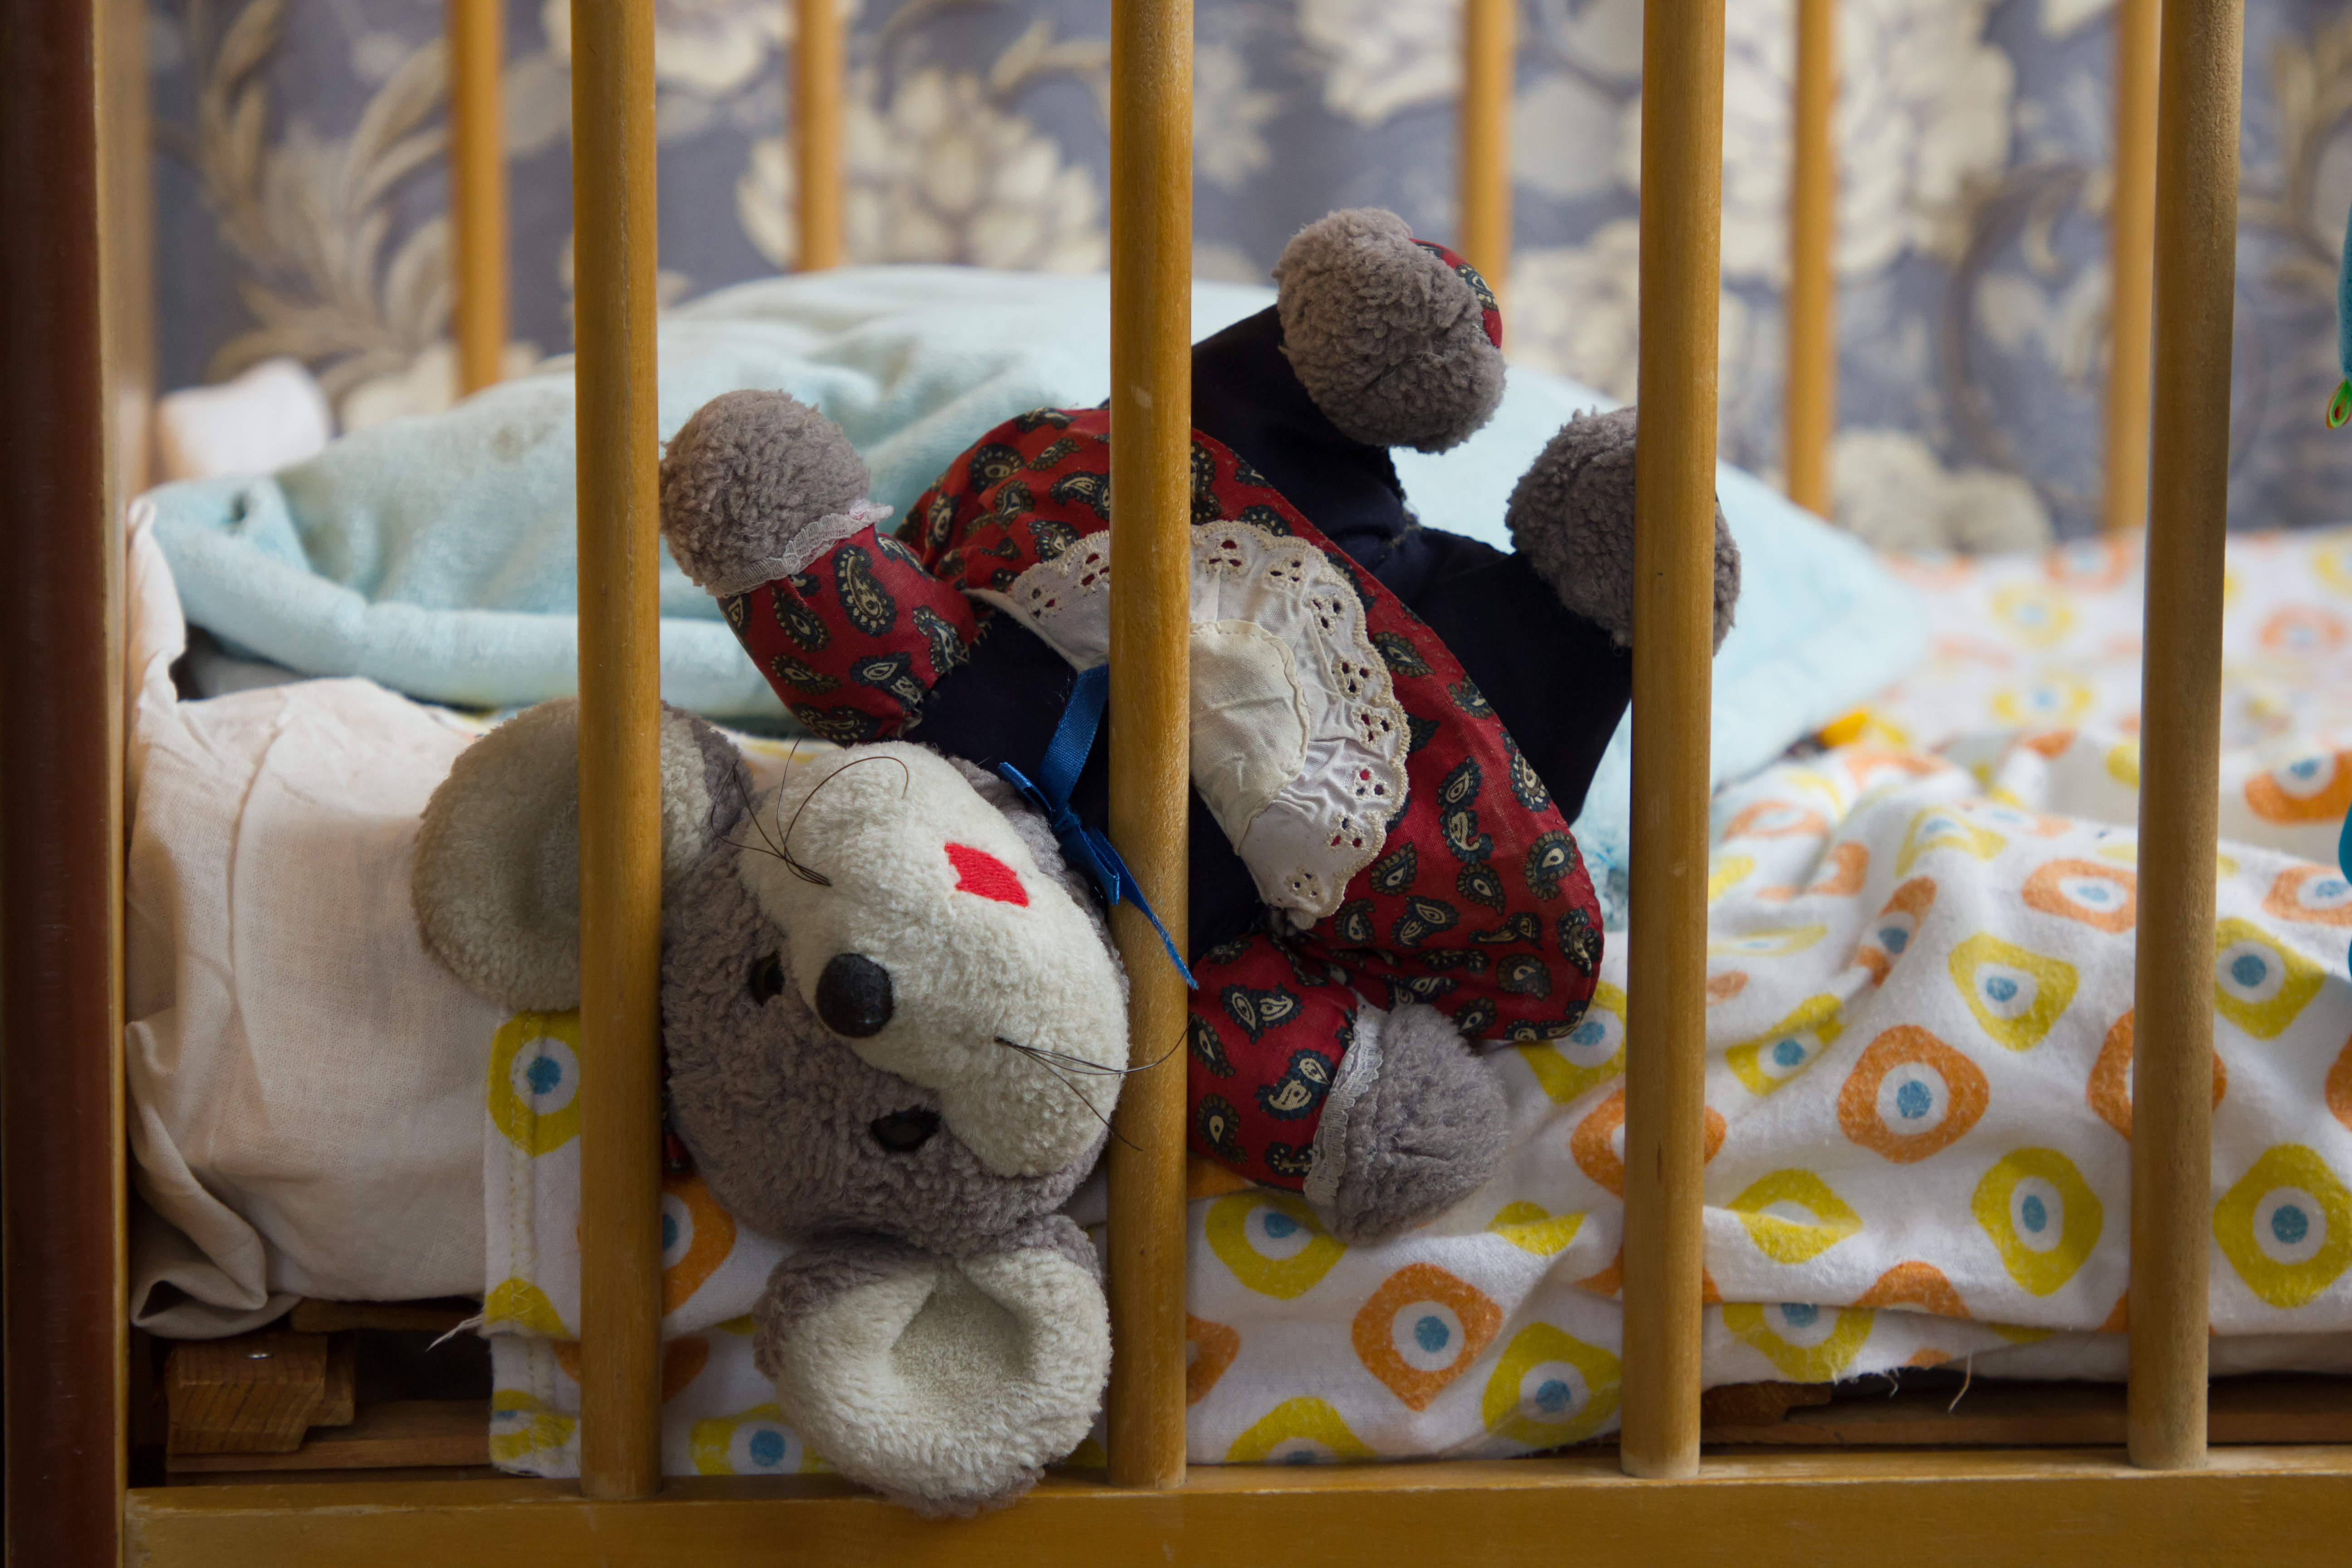 A teddy bear inside a cot | Source: Shutterstock